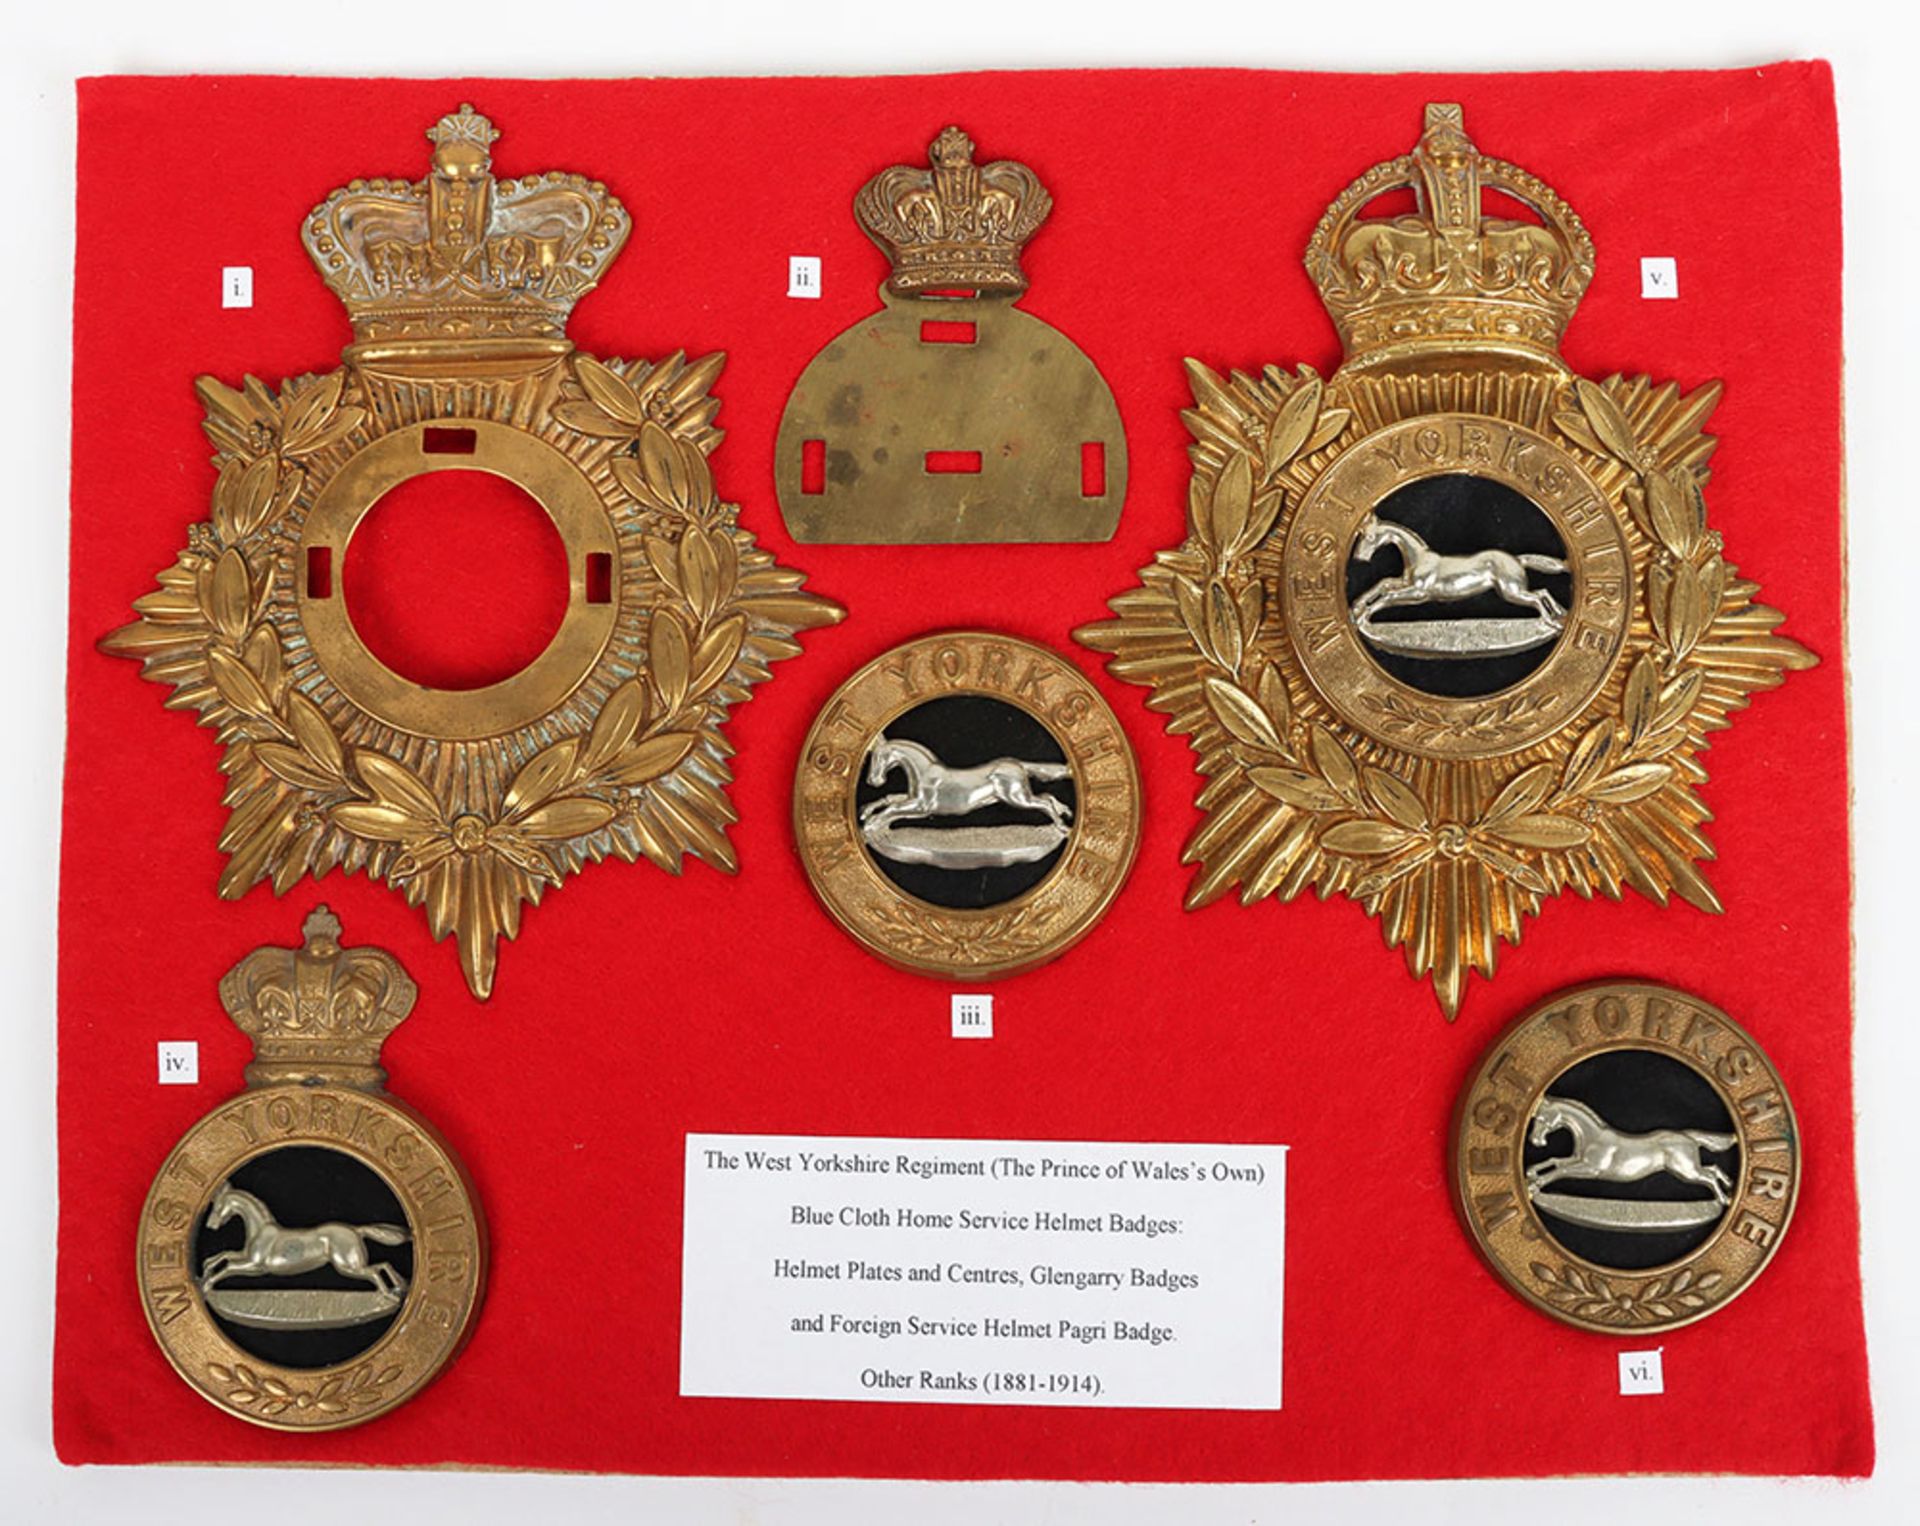 West Yorkshire Regiment Other Ranks Helmet Plate and Glengarry Badges